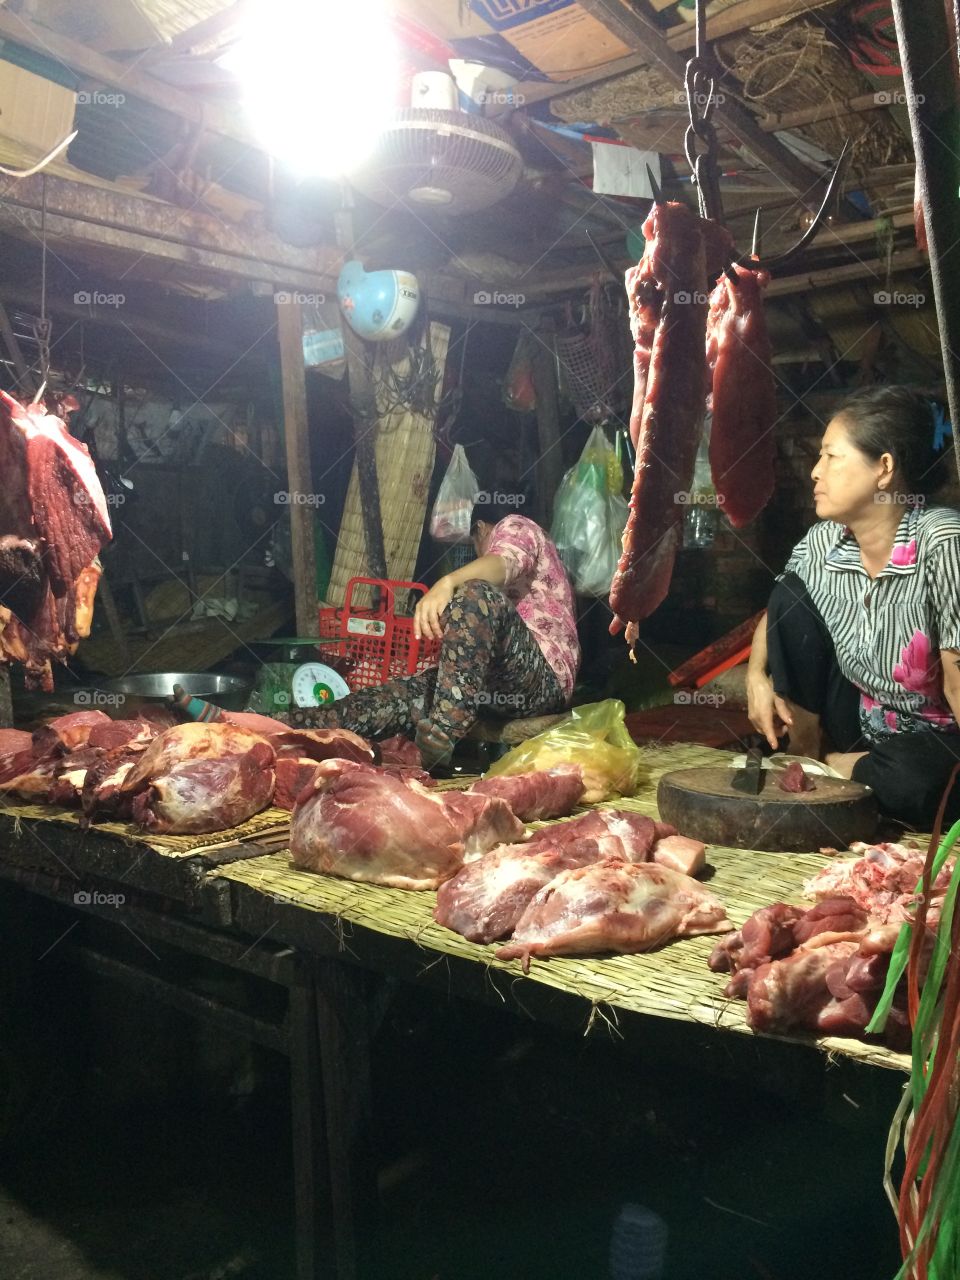 Market, People, Meat, Butcher, Food